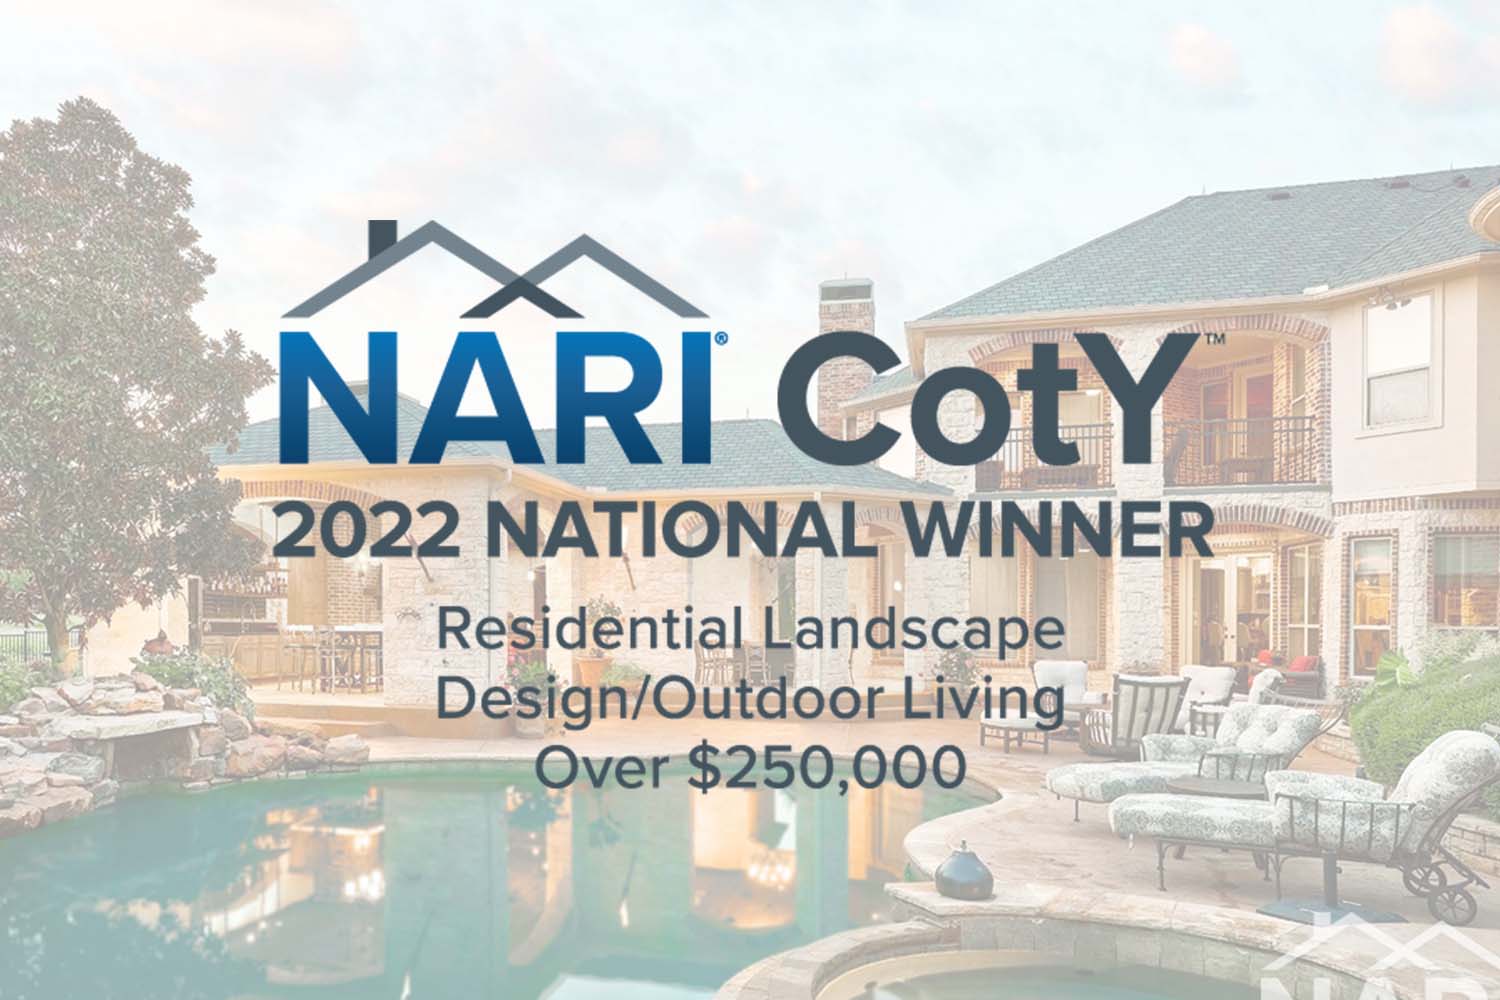 2022 National CotY Award for Residential Landscape Design/Outdoor Living over $250,000 